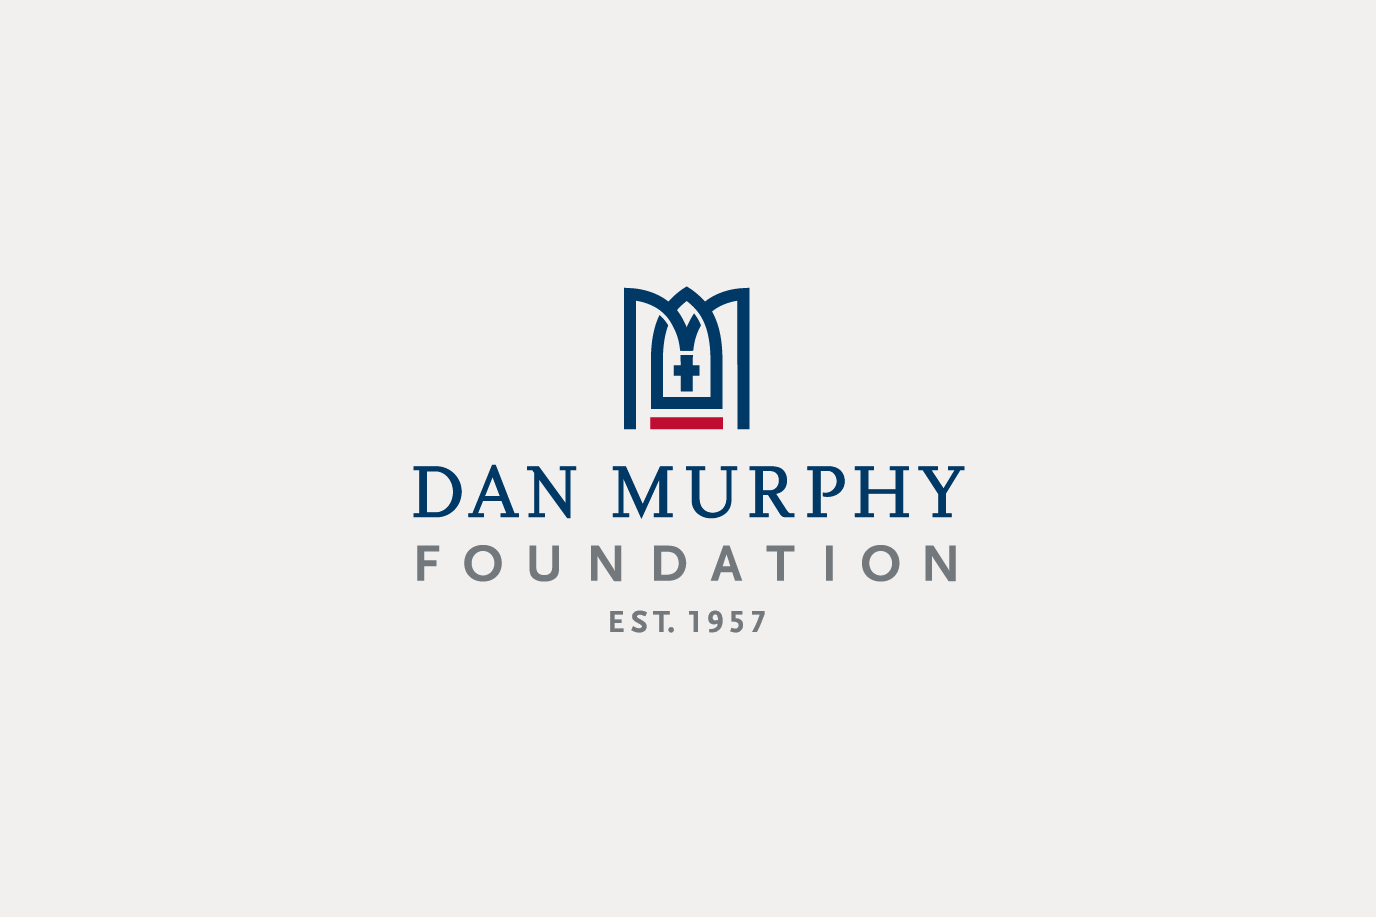 Dan Murphy Foundation – Identity